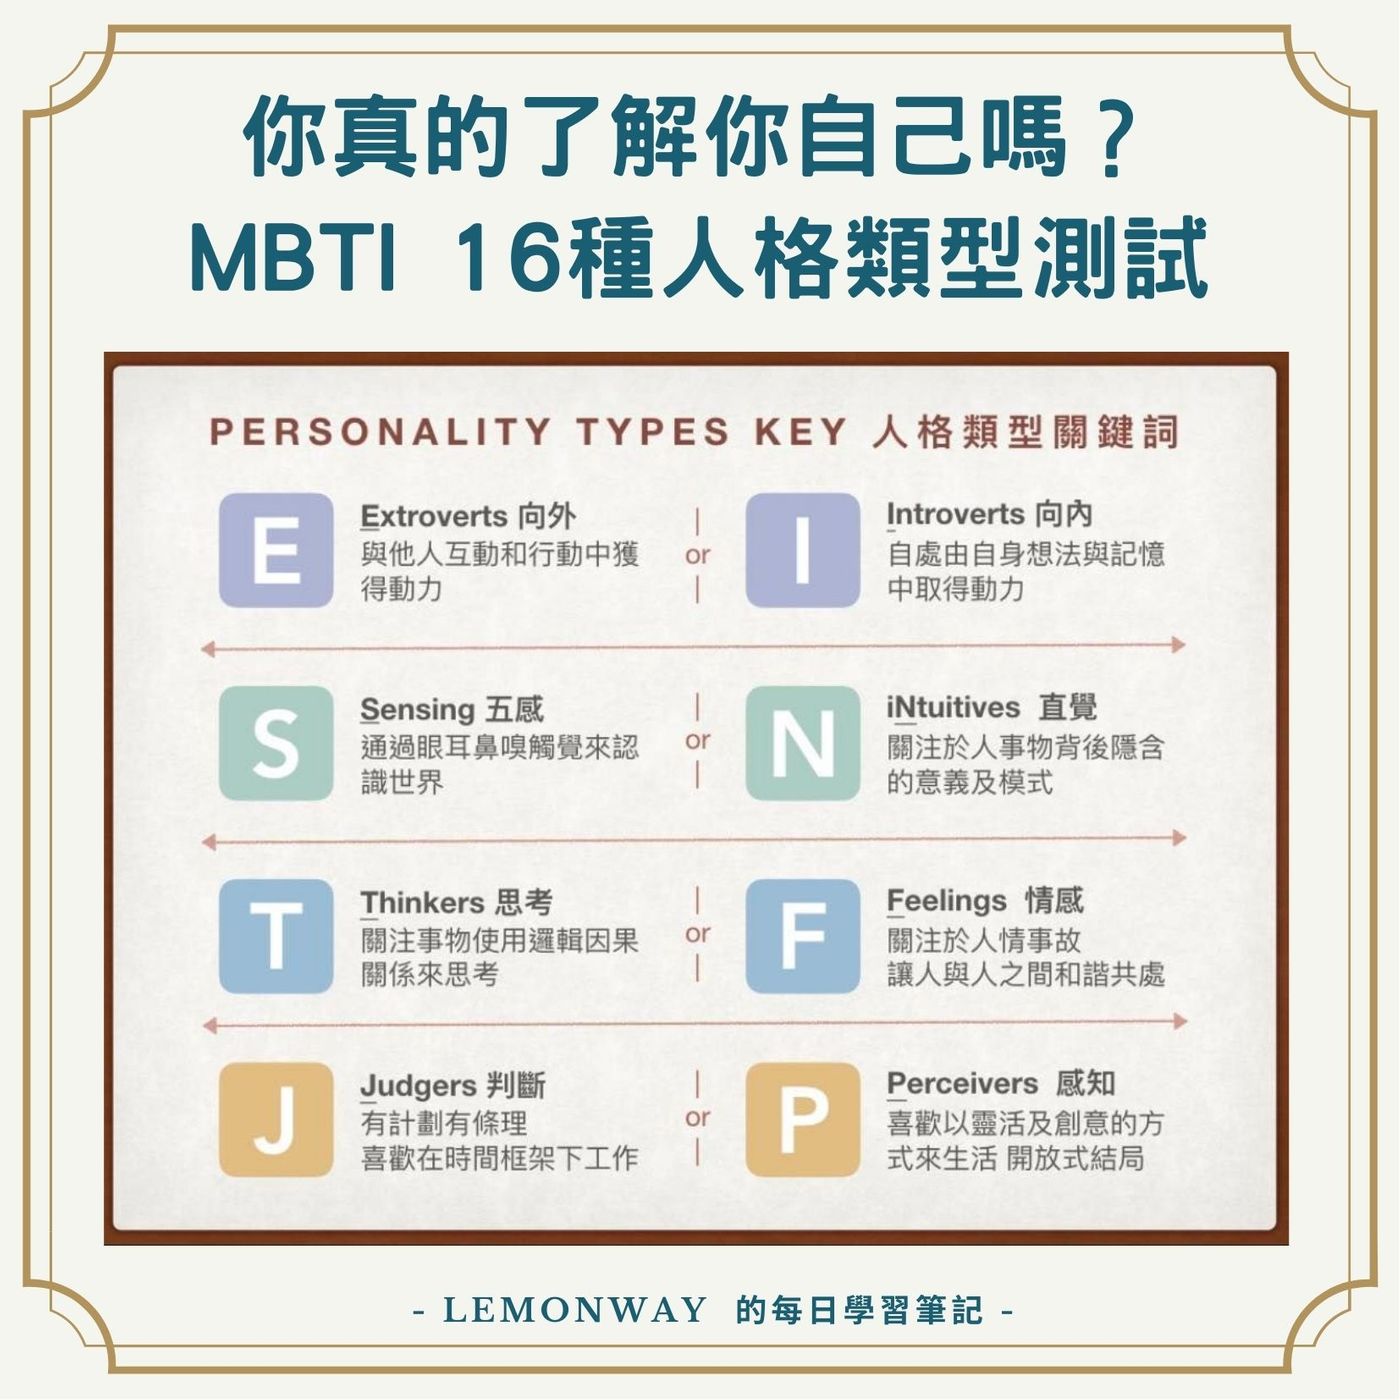 MBTI 16型人格——所有类型特点 - 知乎